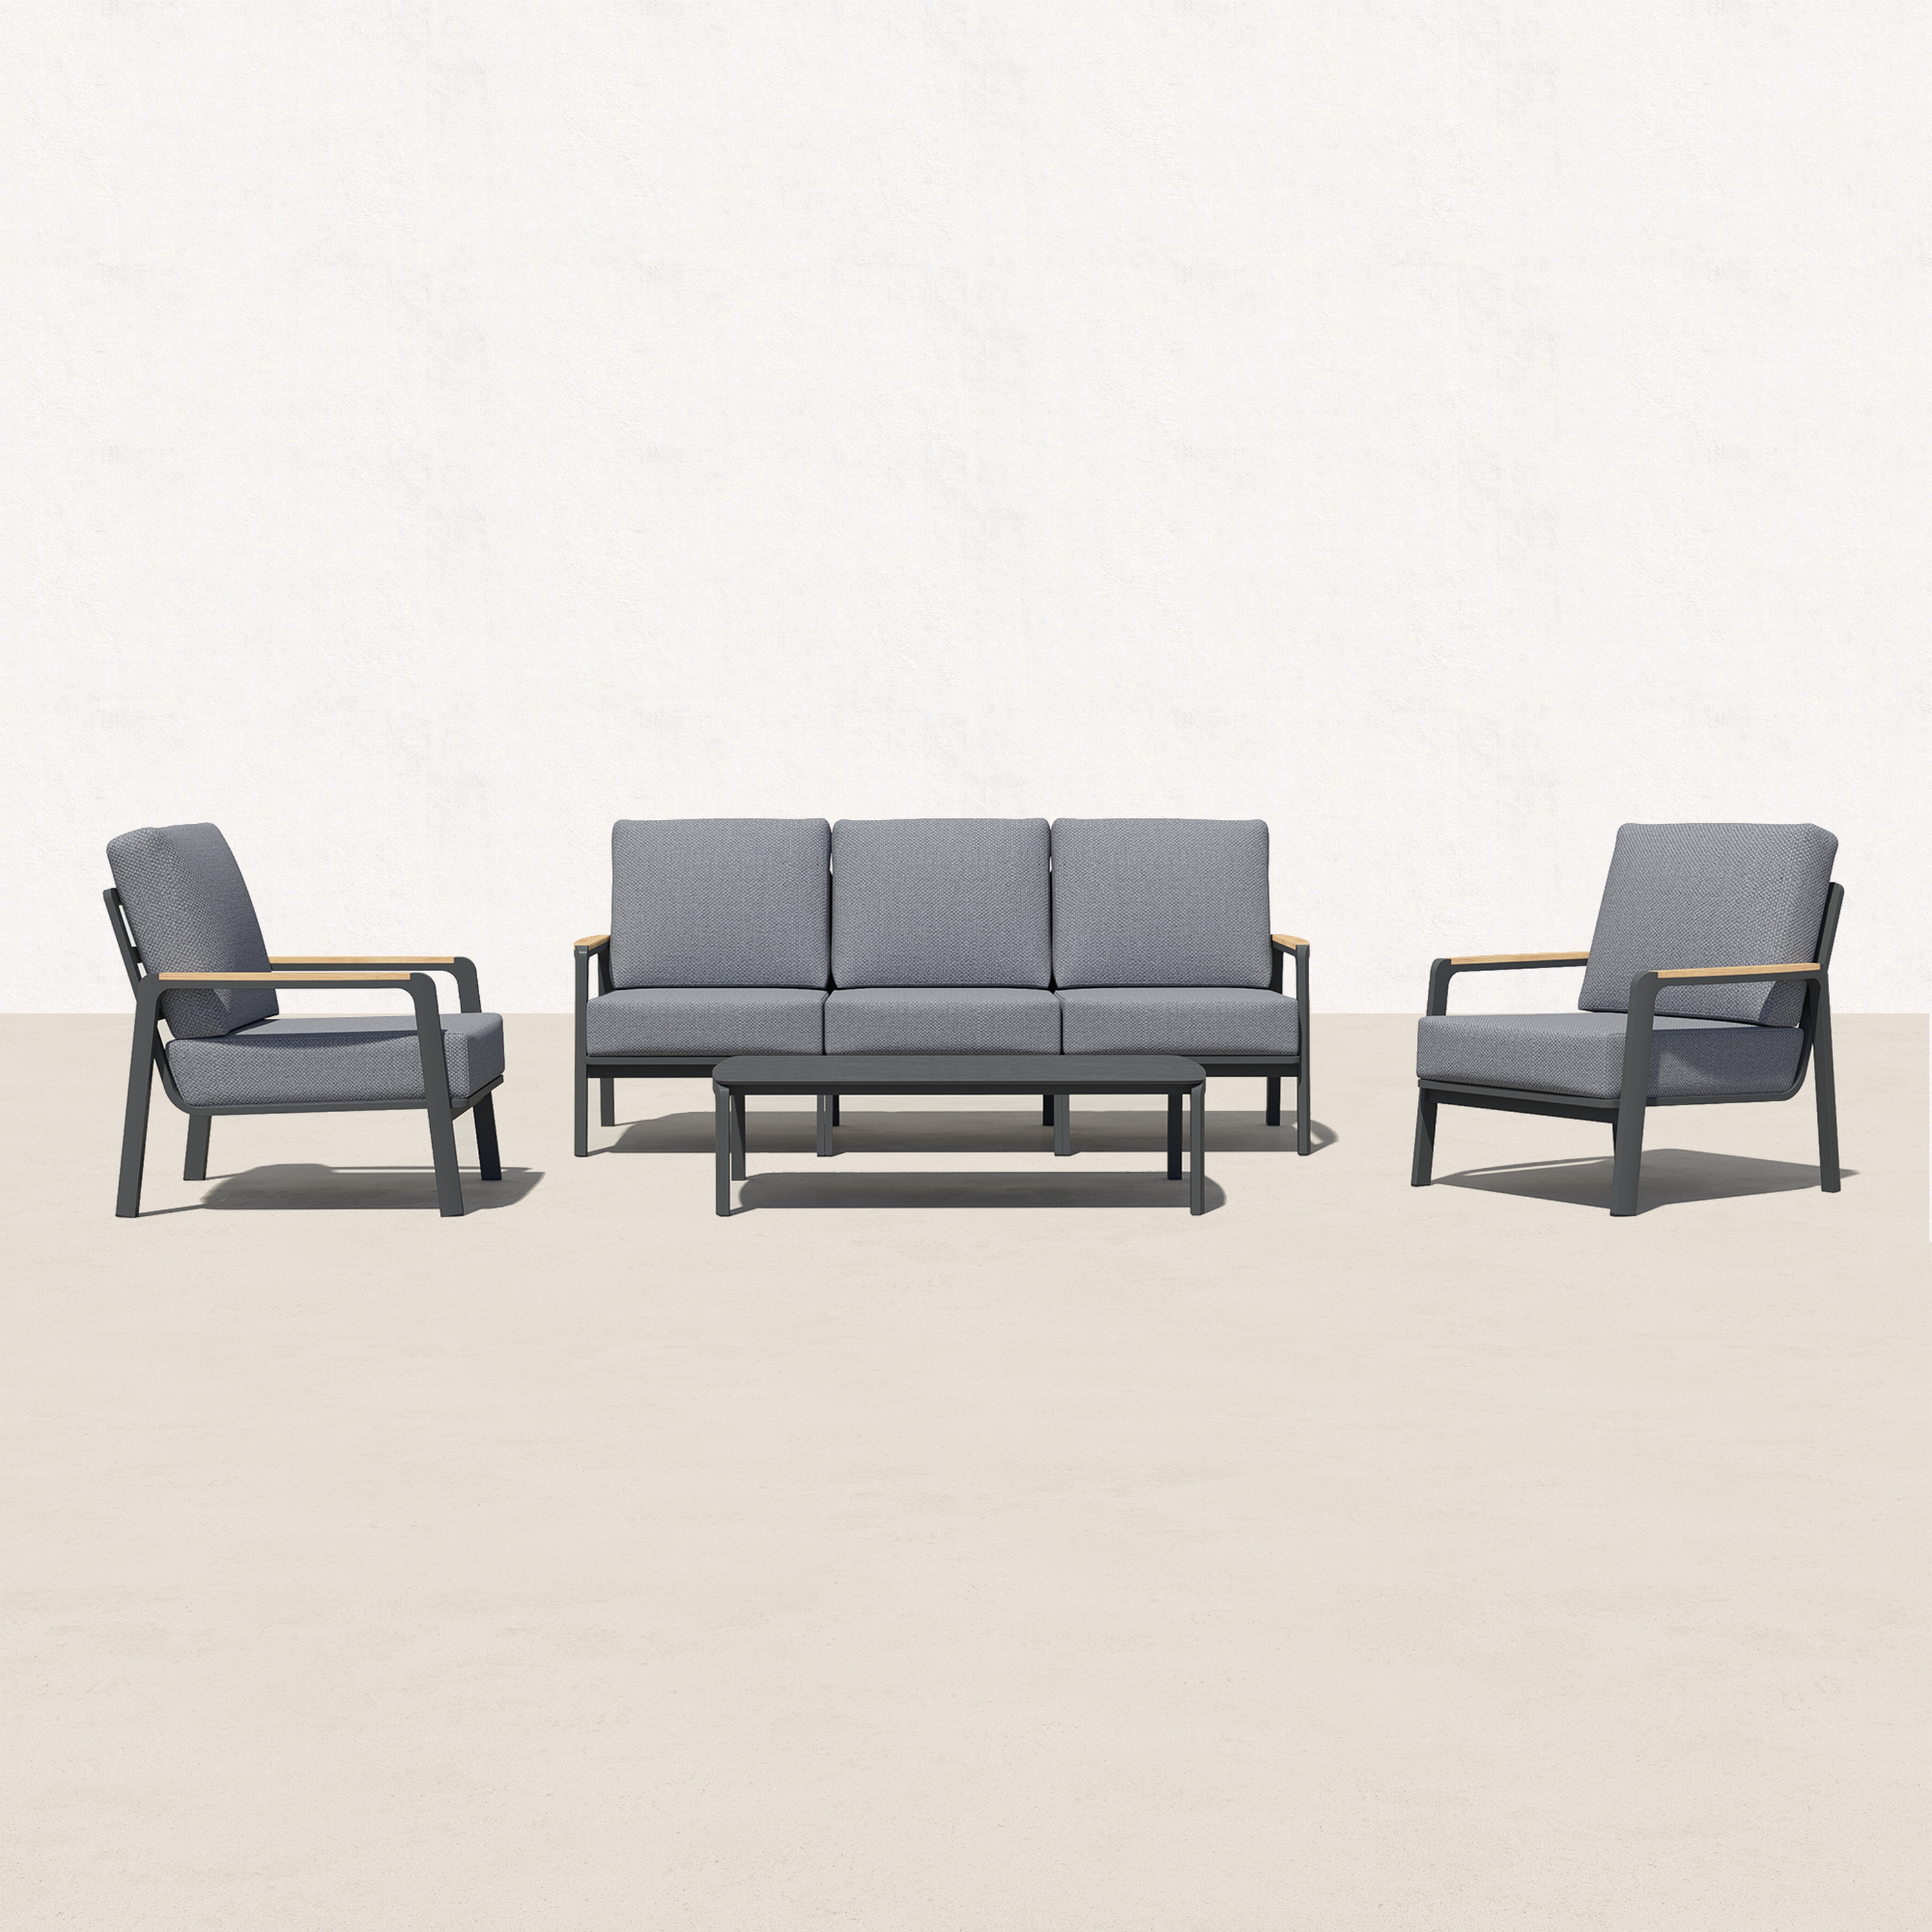 Orion Teak Outdoor Sofa with Coffee Table - 5 Seat-Baeryon Furniture